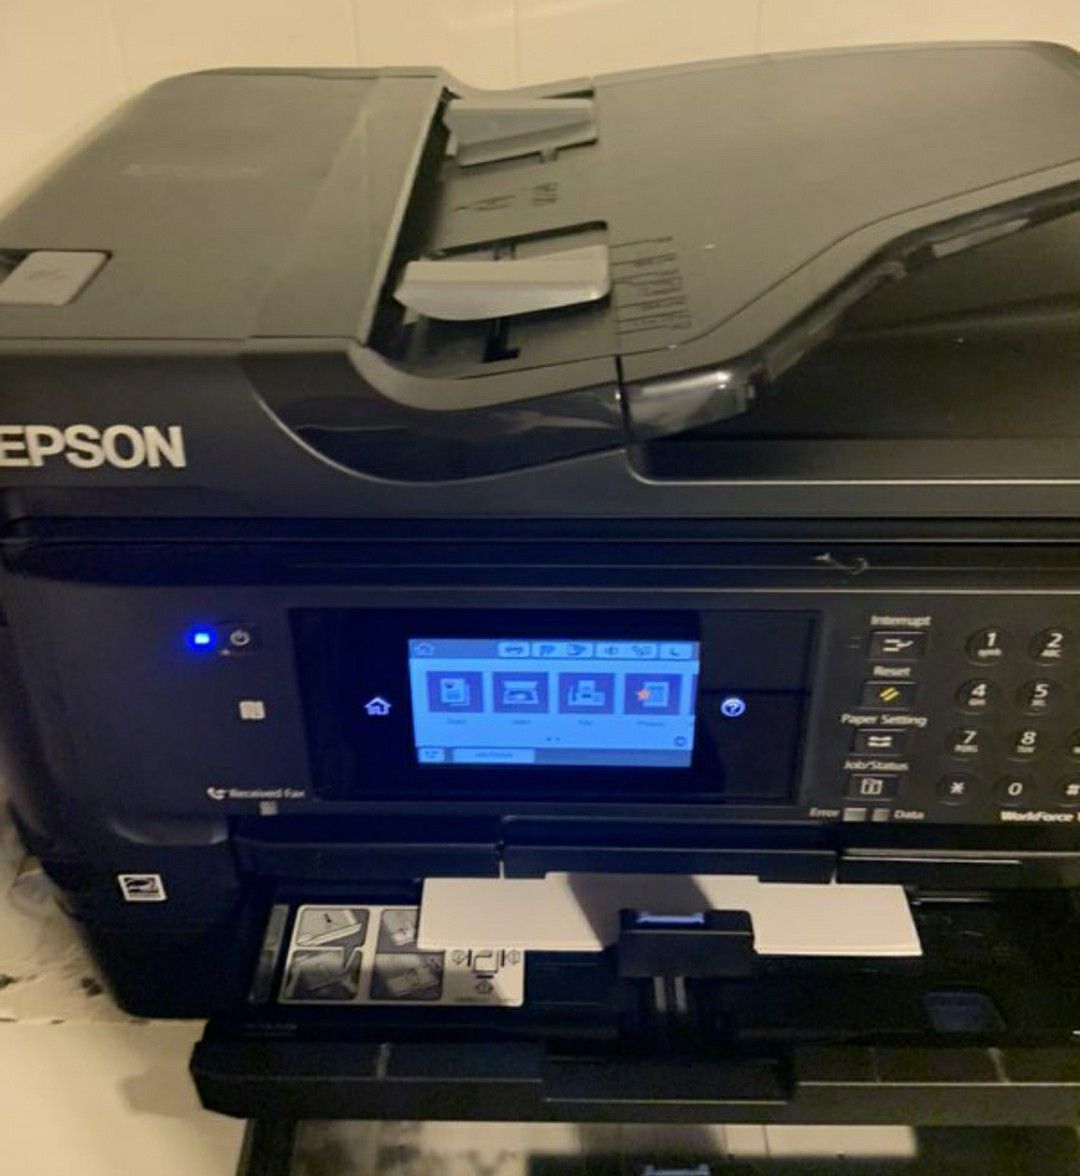 Sublimation printer